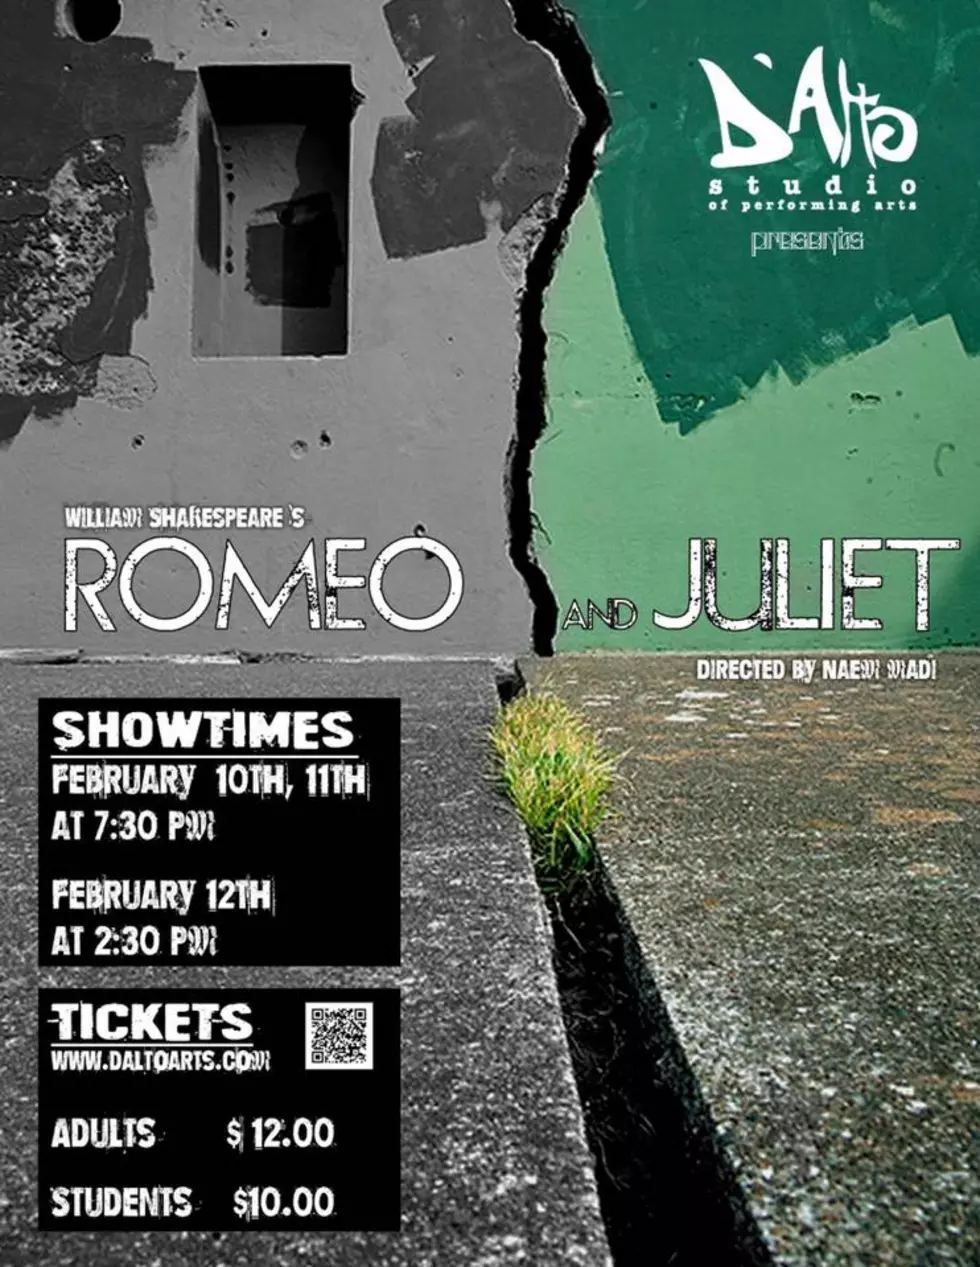 D&#8217;Alto Studio of Performing Arts Presents Romeo and Juliet! (Interview)